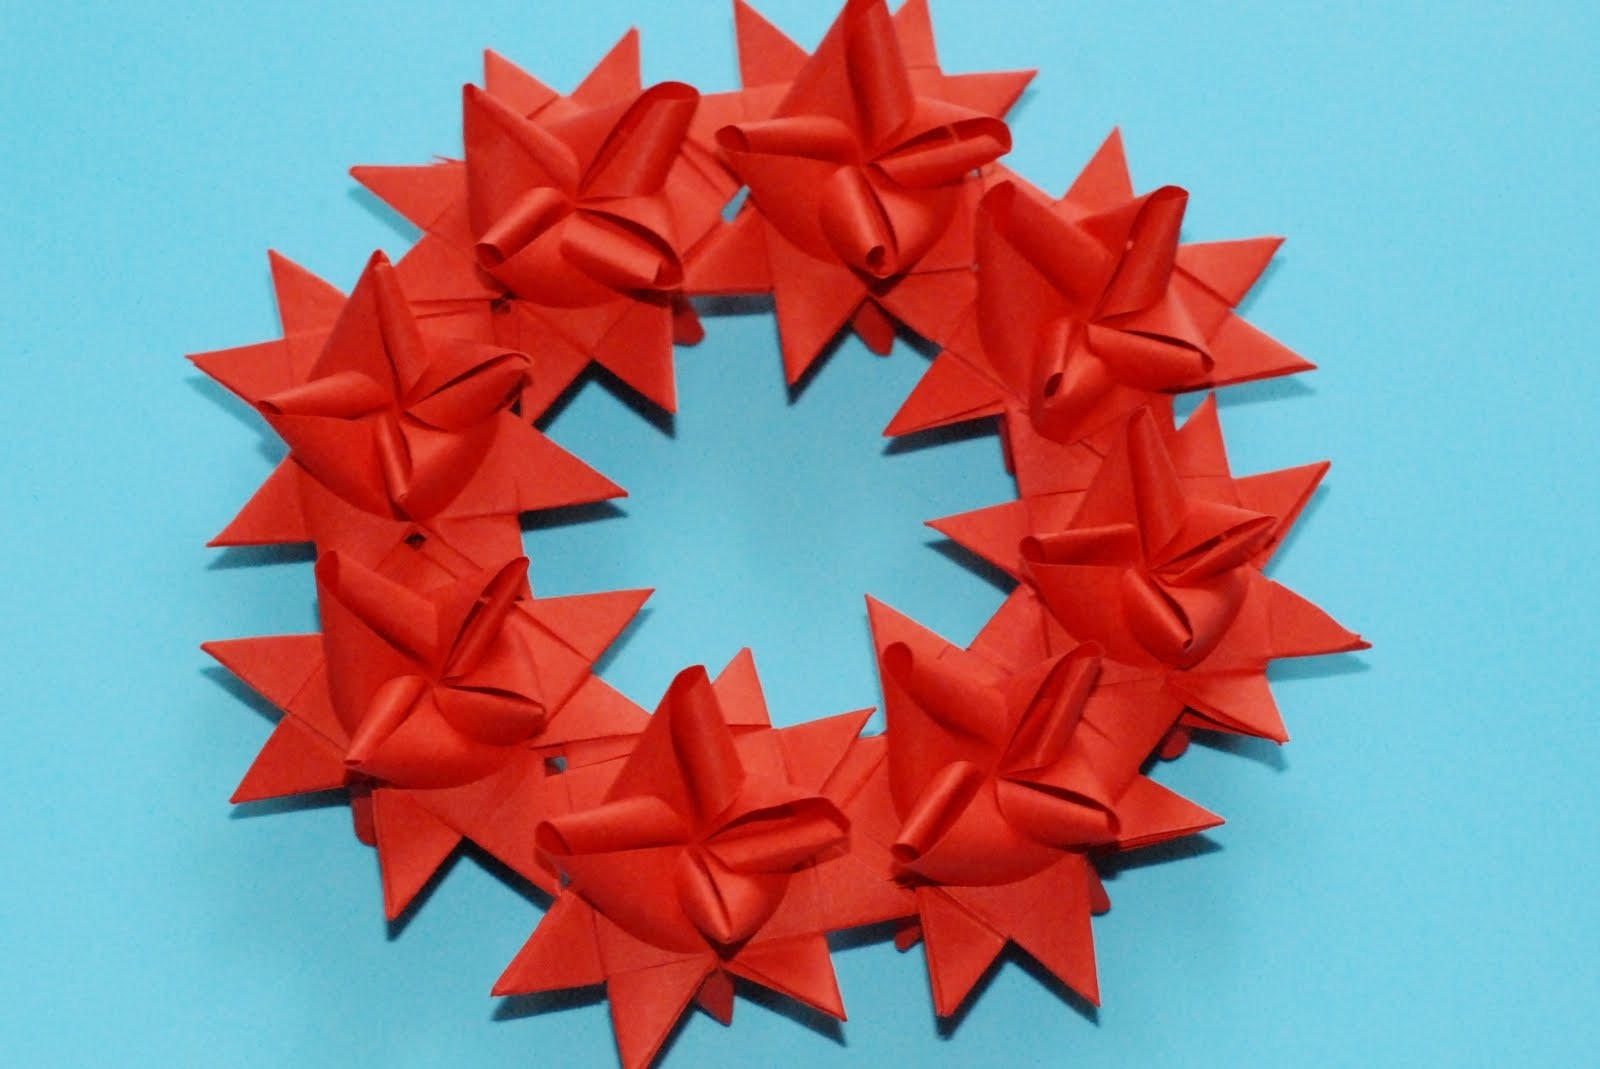 Jak zrobić Wieniec z Gwiazdek Froebla. How to make a Froebel Star Wreath